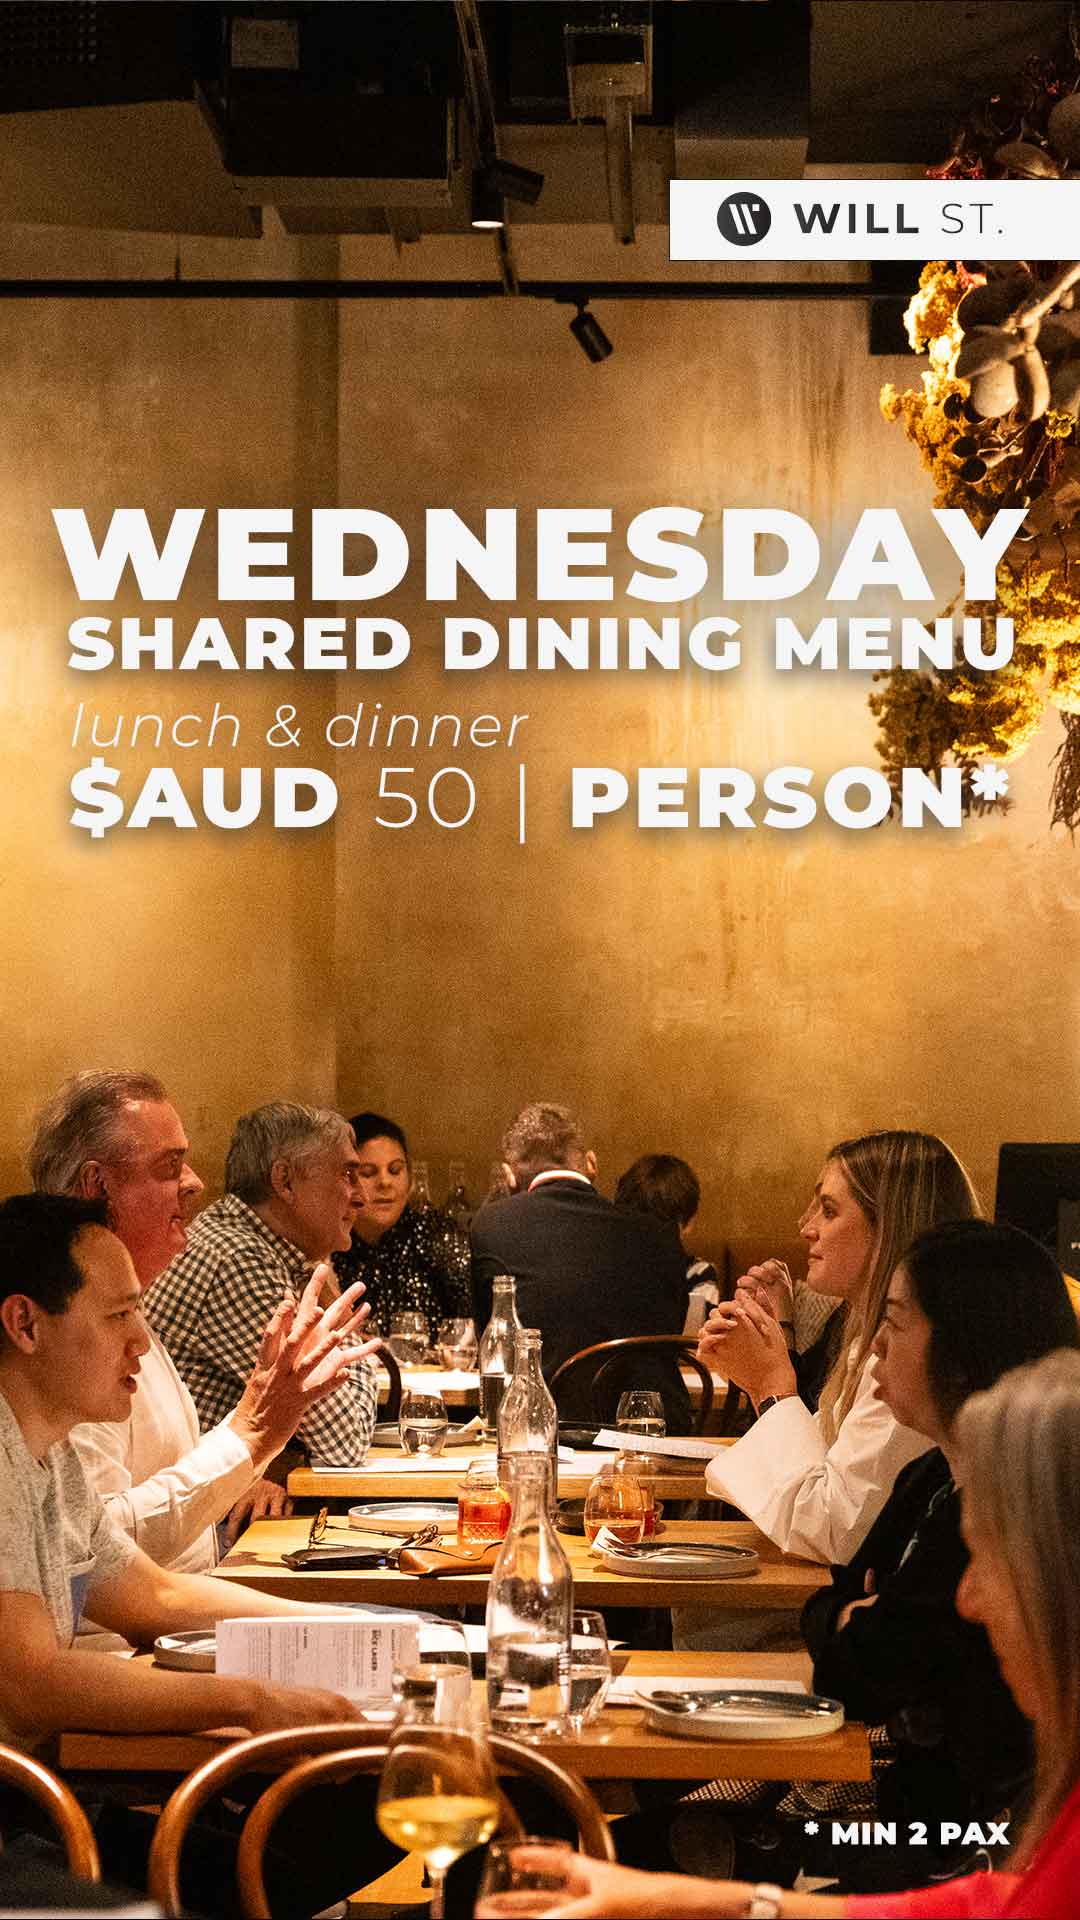 Wednesday Offer: Shared Dining Menu $50